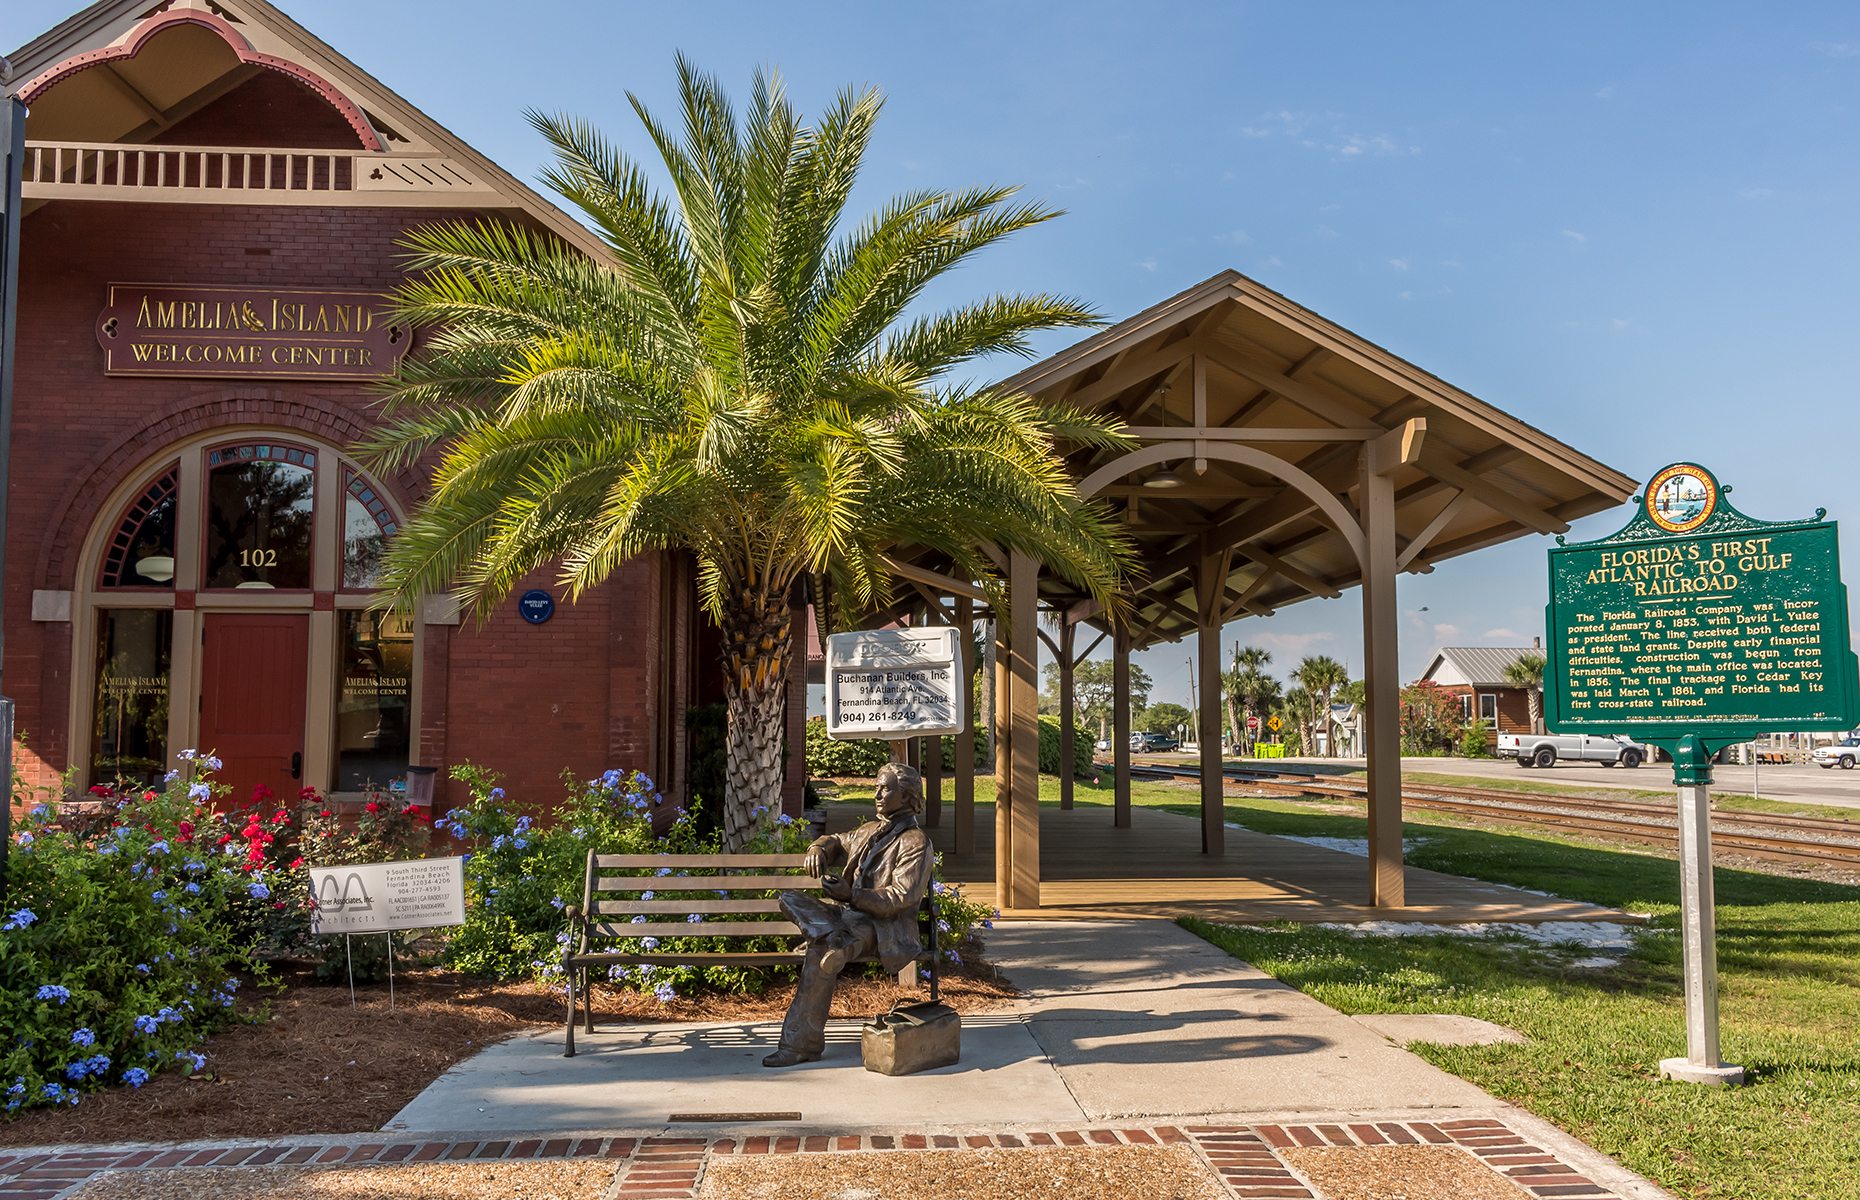 Welcome Centre, Amelia Island, Florida. (Image: Amelia Island Tourist Development Council)